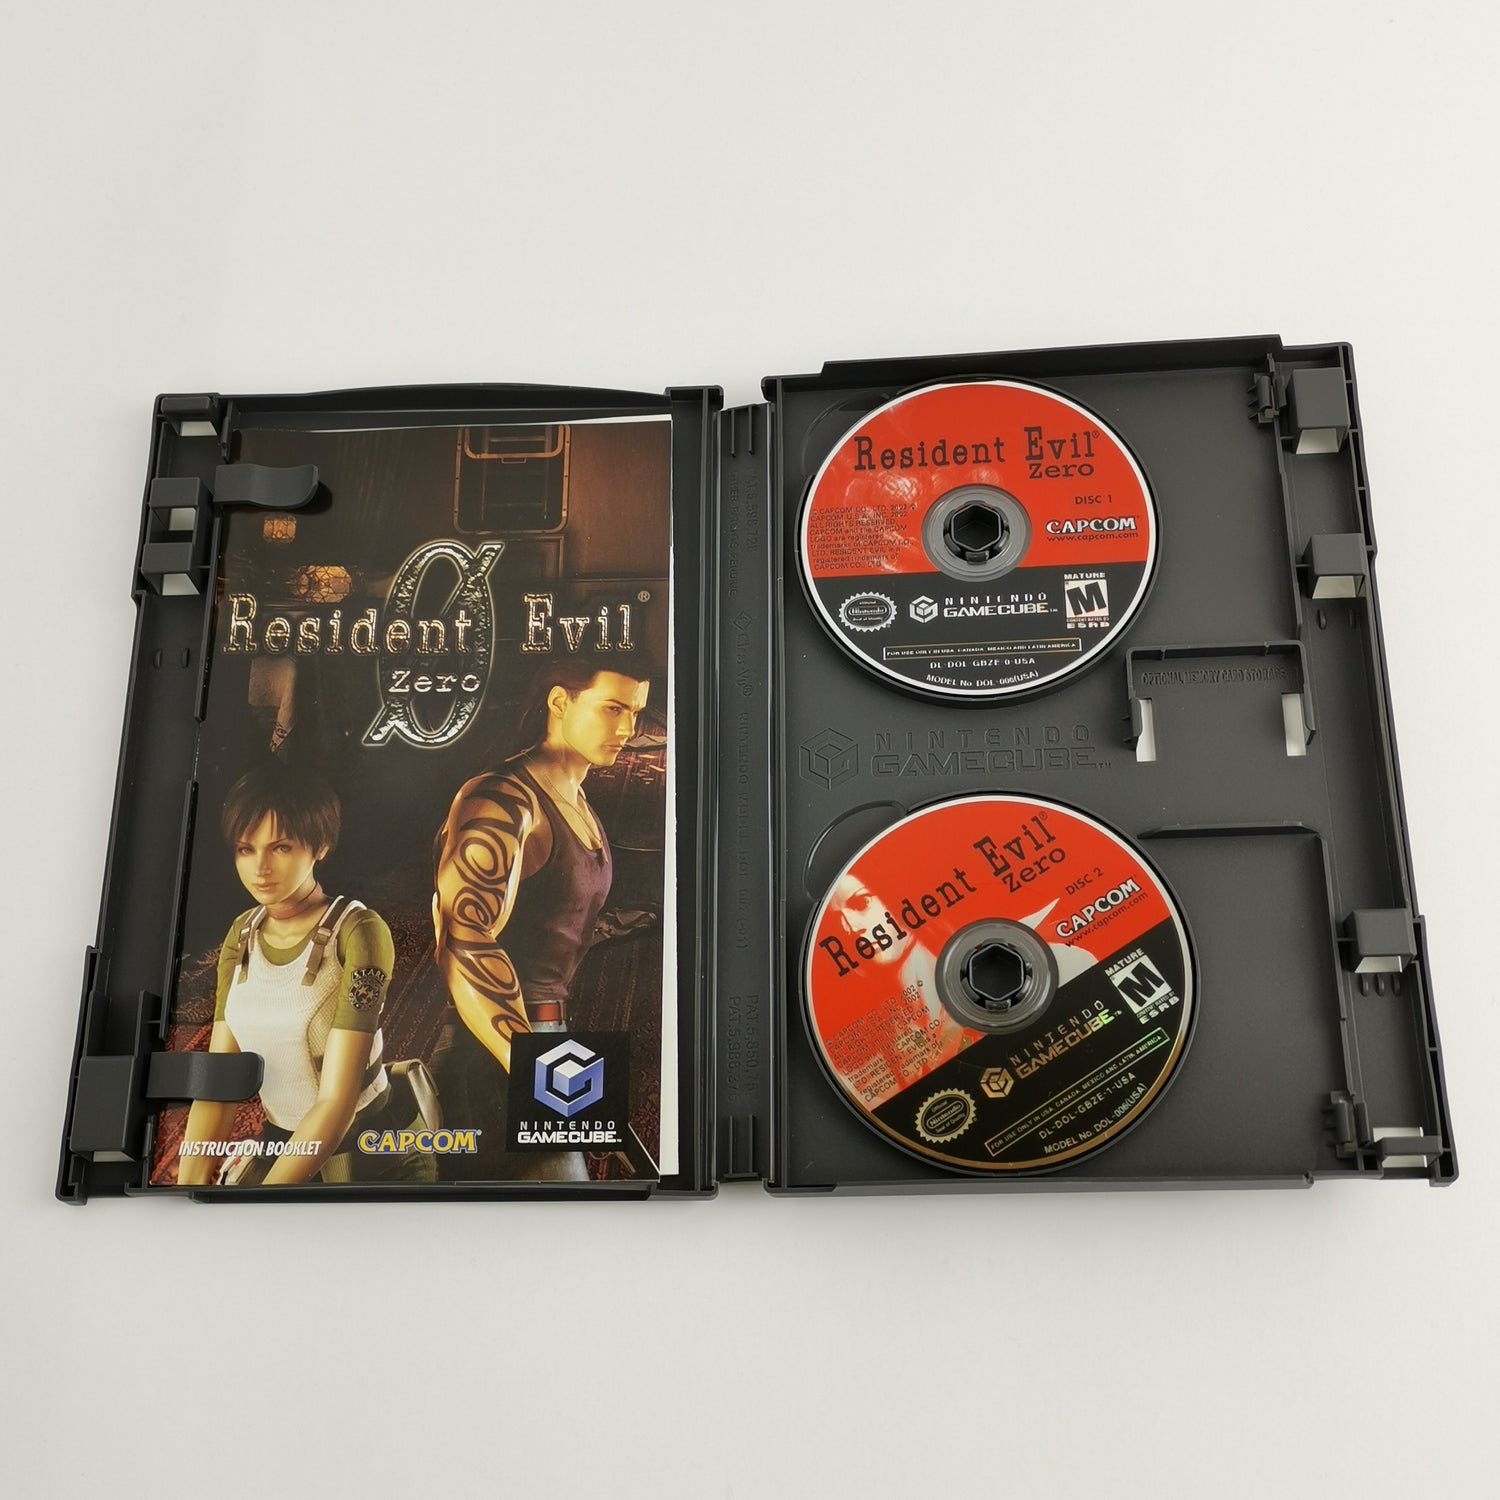 Nintendo Gamecube Game: Resident Evil Zero | US version - original packaging - Capcom - USK18